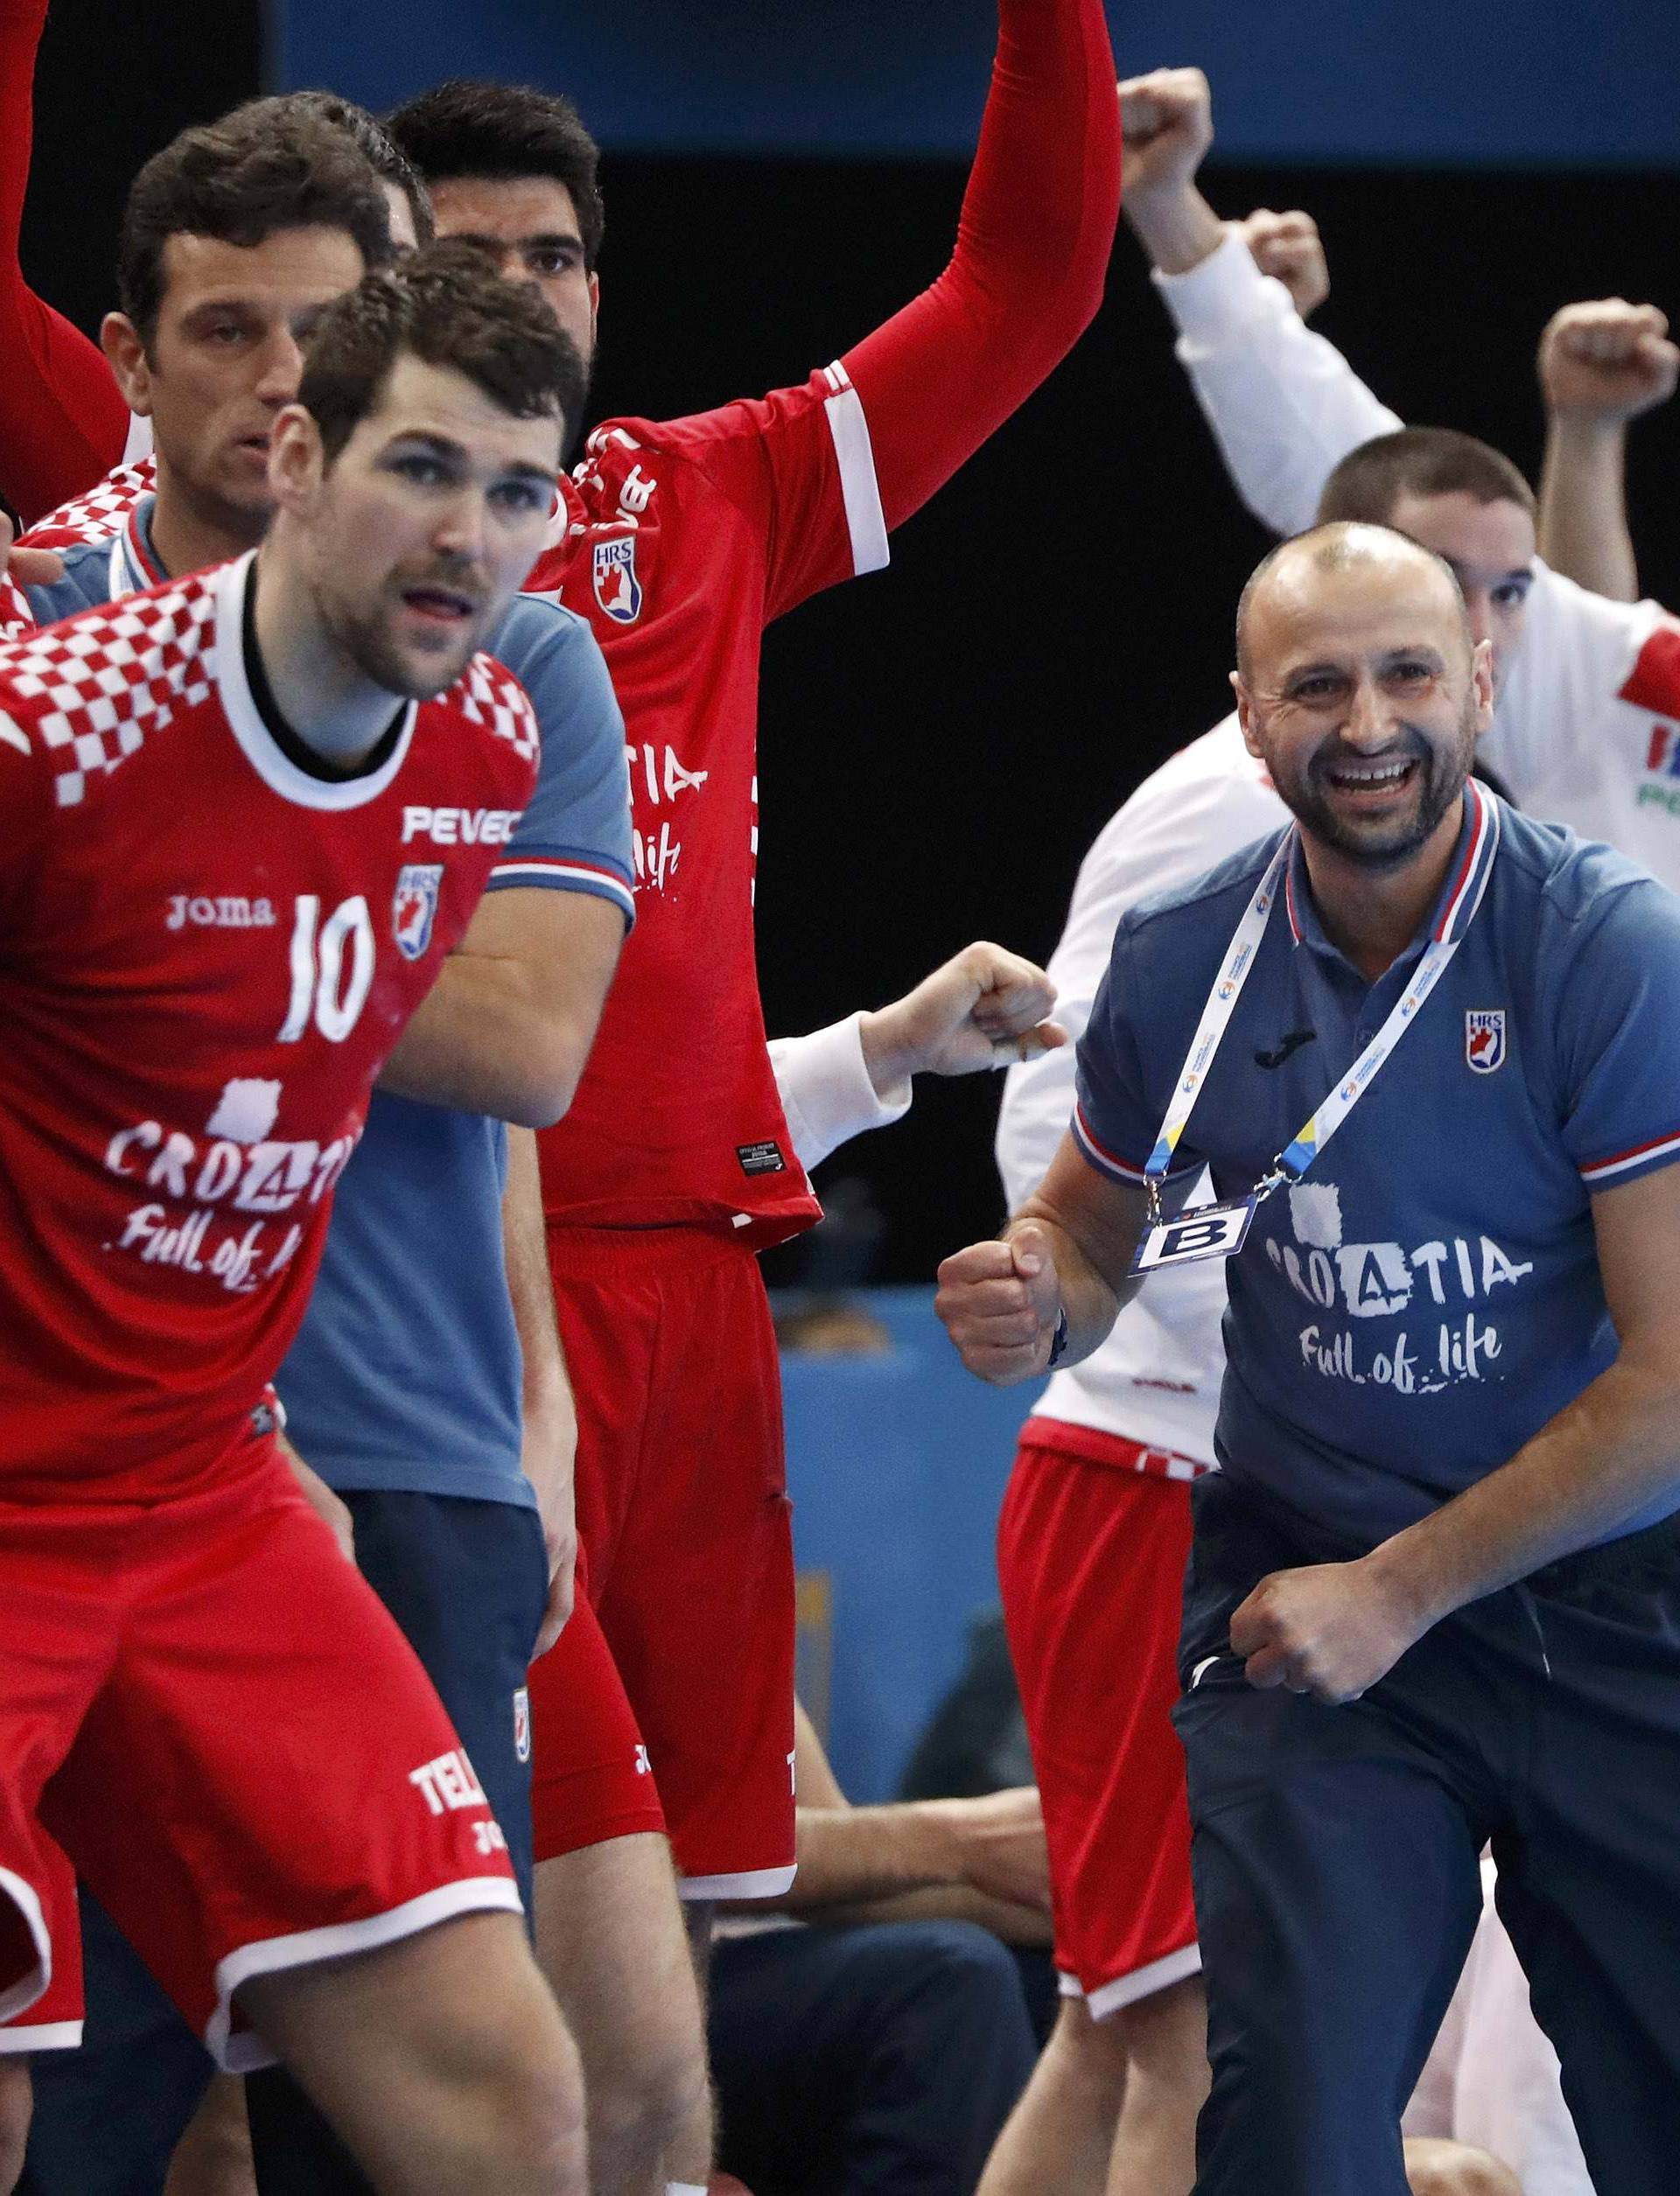 Men's Handball - Slovenia v Croatia - 2017 Men's World Championship, Bronze Medal 